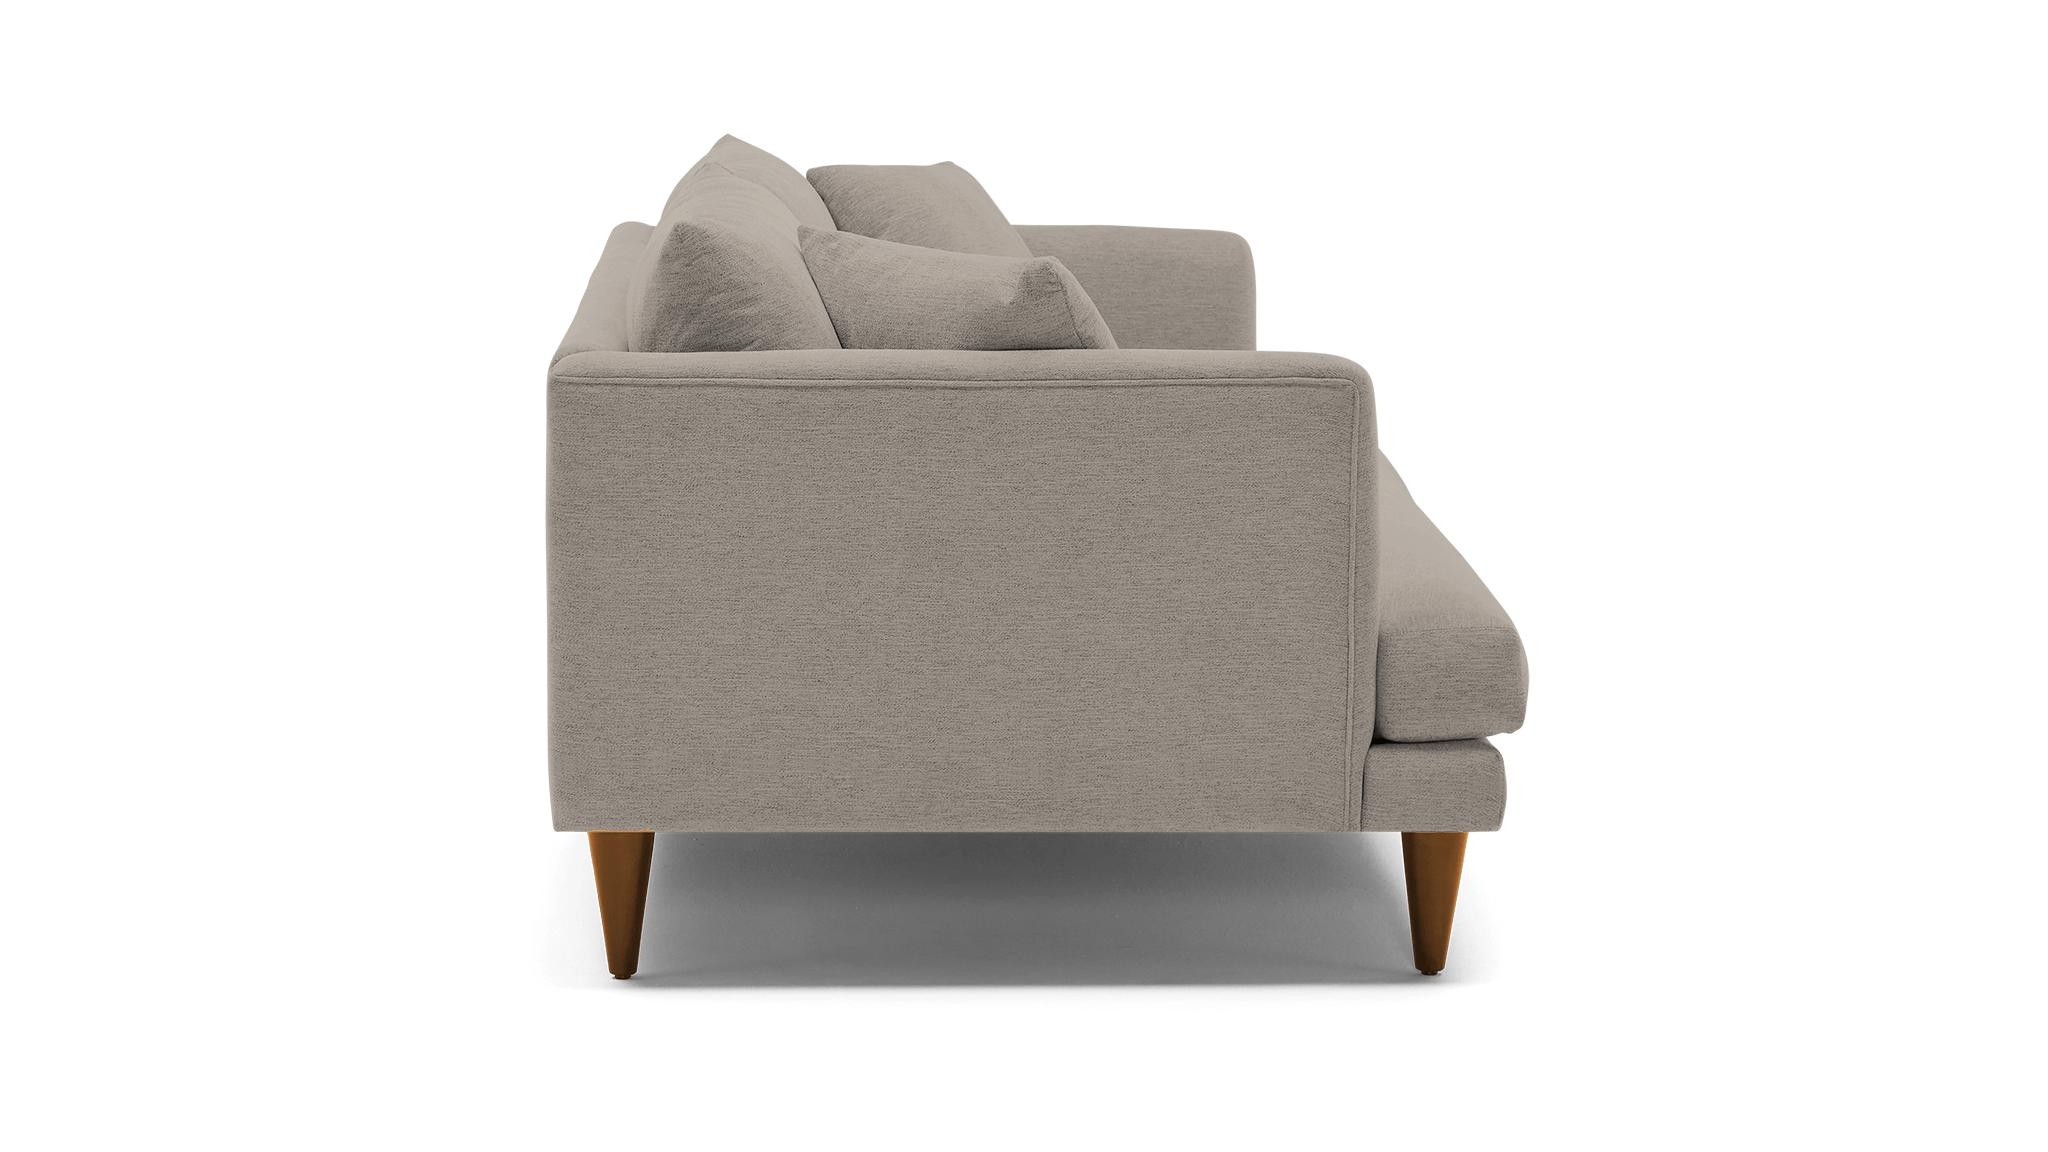 Beige/White Lewis Mid Century Modern Sofa - Prime Stone - Mocha - Cone - Image 2